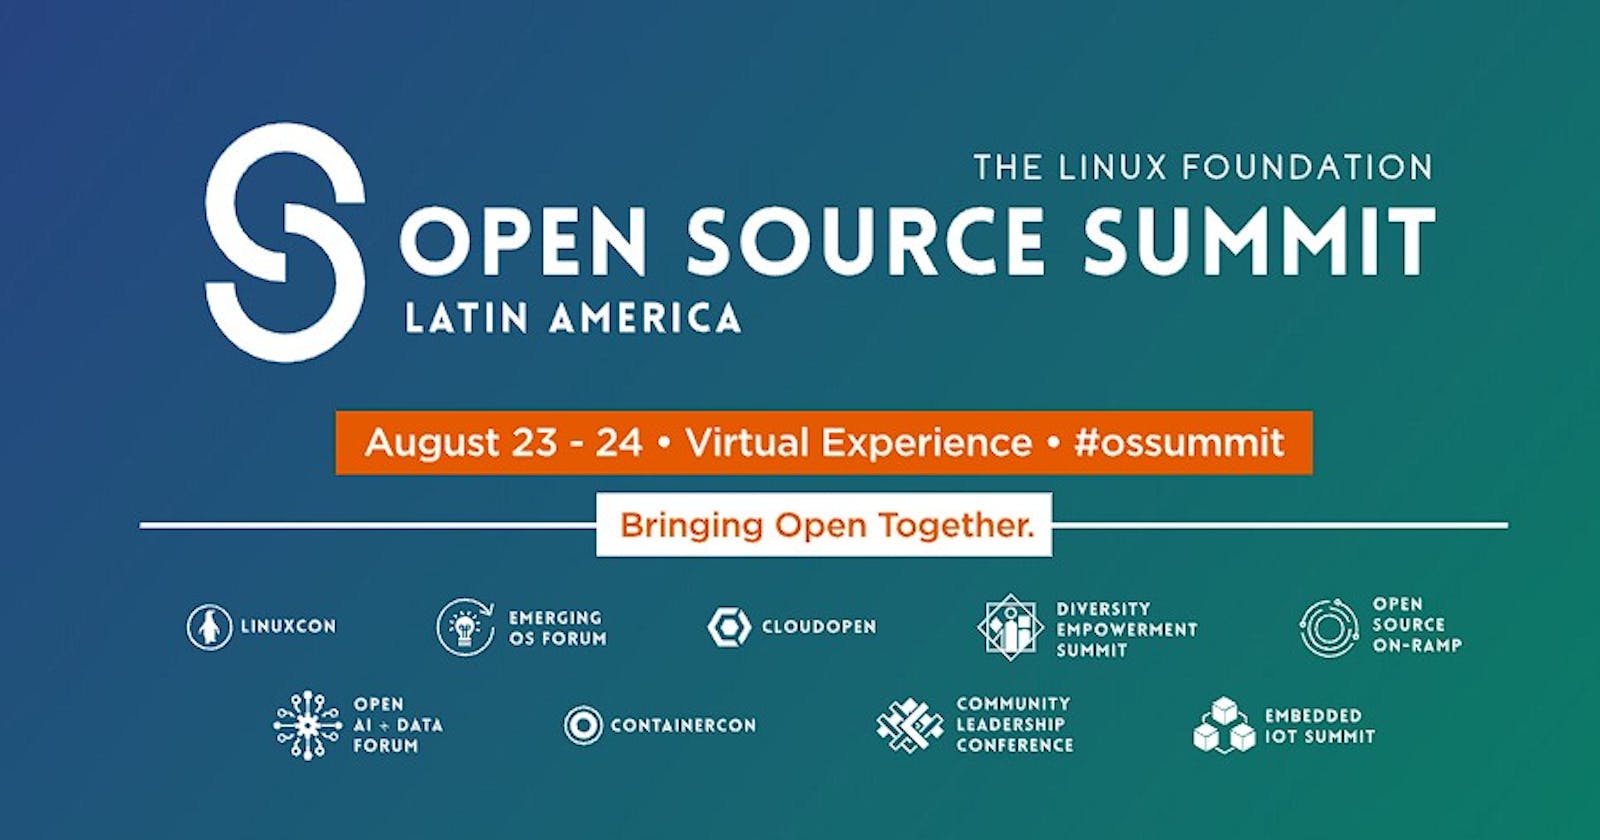 My Open Source Summit Latin America 2022 Experience